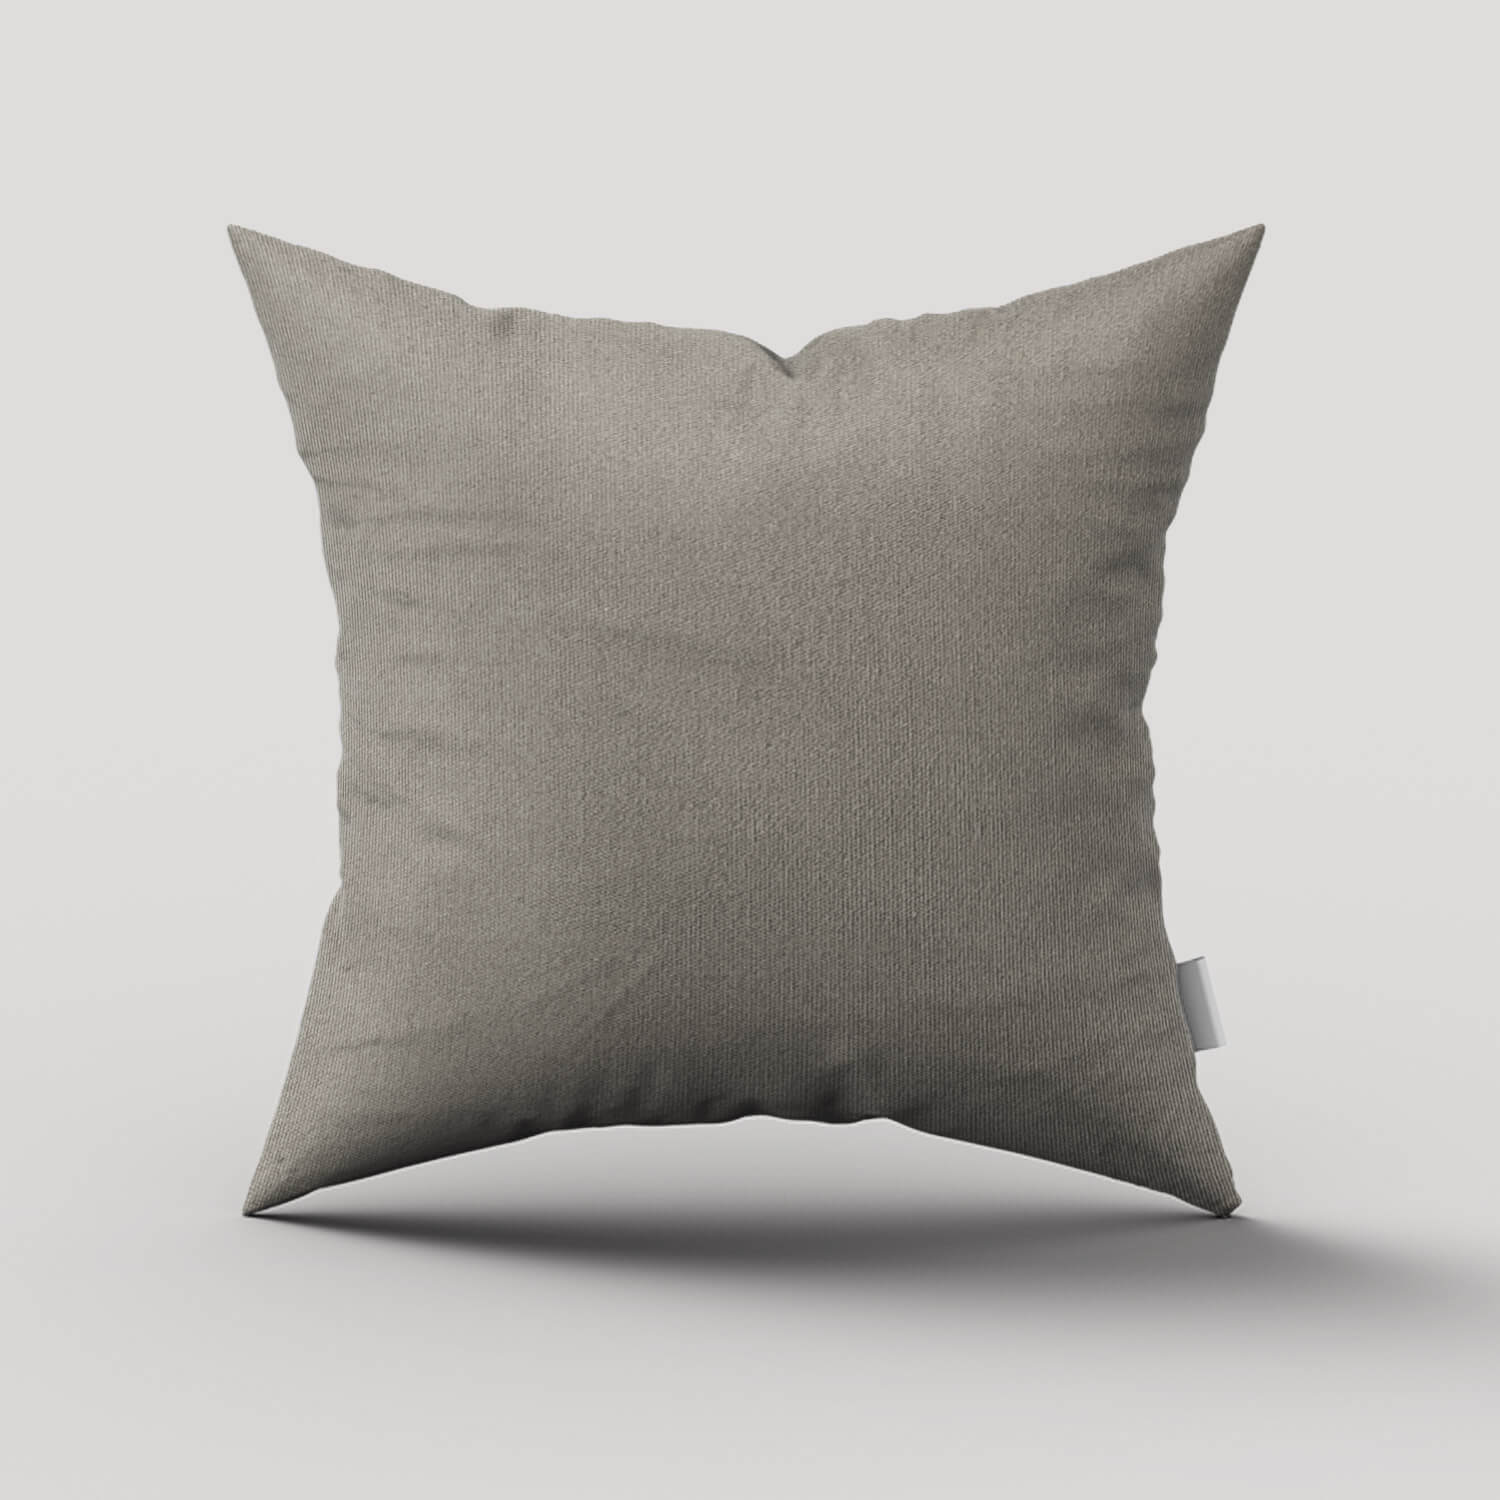 PENGI Waterproof Outdoor Pillow Case 1 Pcs - Pure Elephant Gray